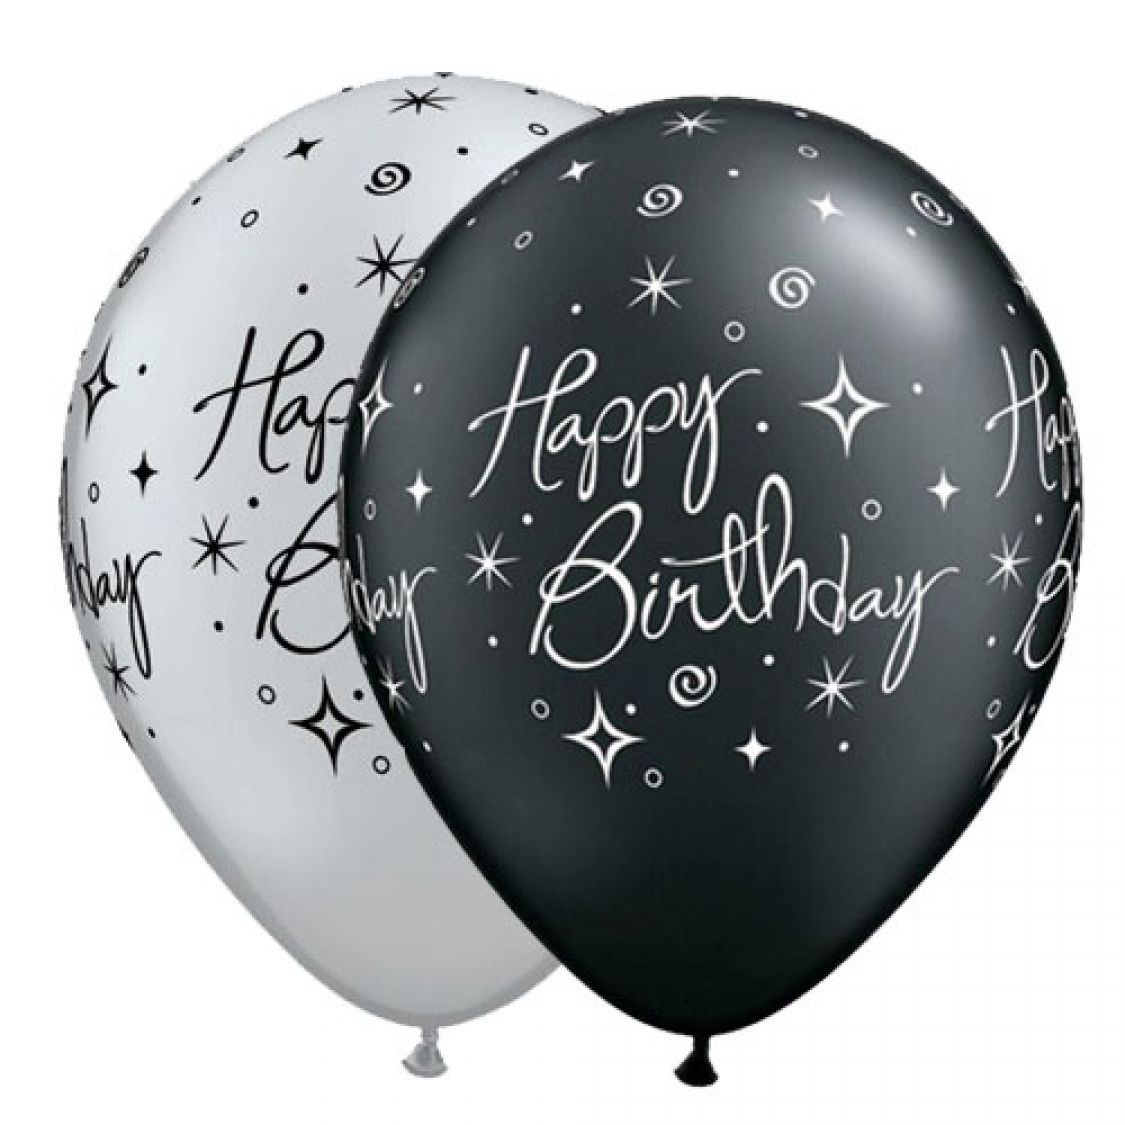 https://www.ballons-a-gogo.com/images/cache/1125x1125/ballons__thme/ballons_anniversaire/happy_birthday/ballon_happy_birthday_qualatex_noir_argent.jpg